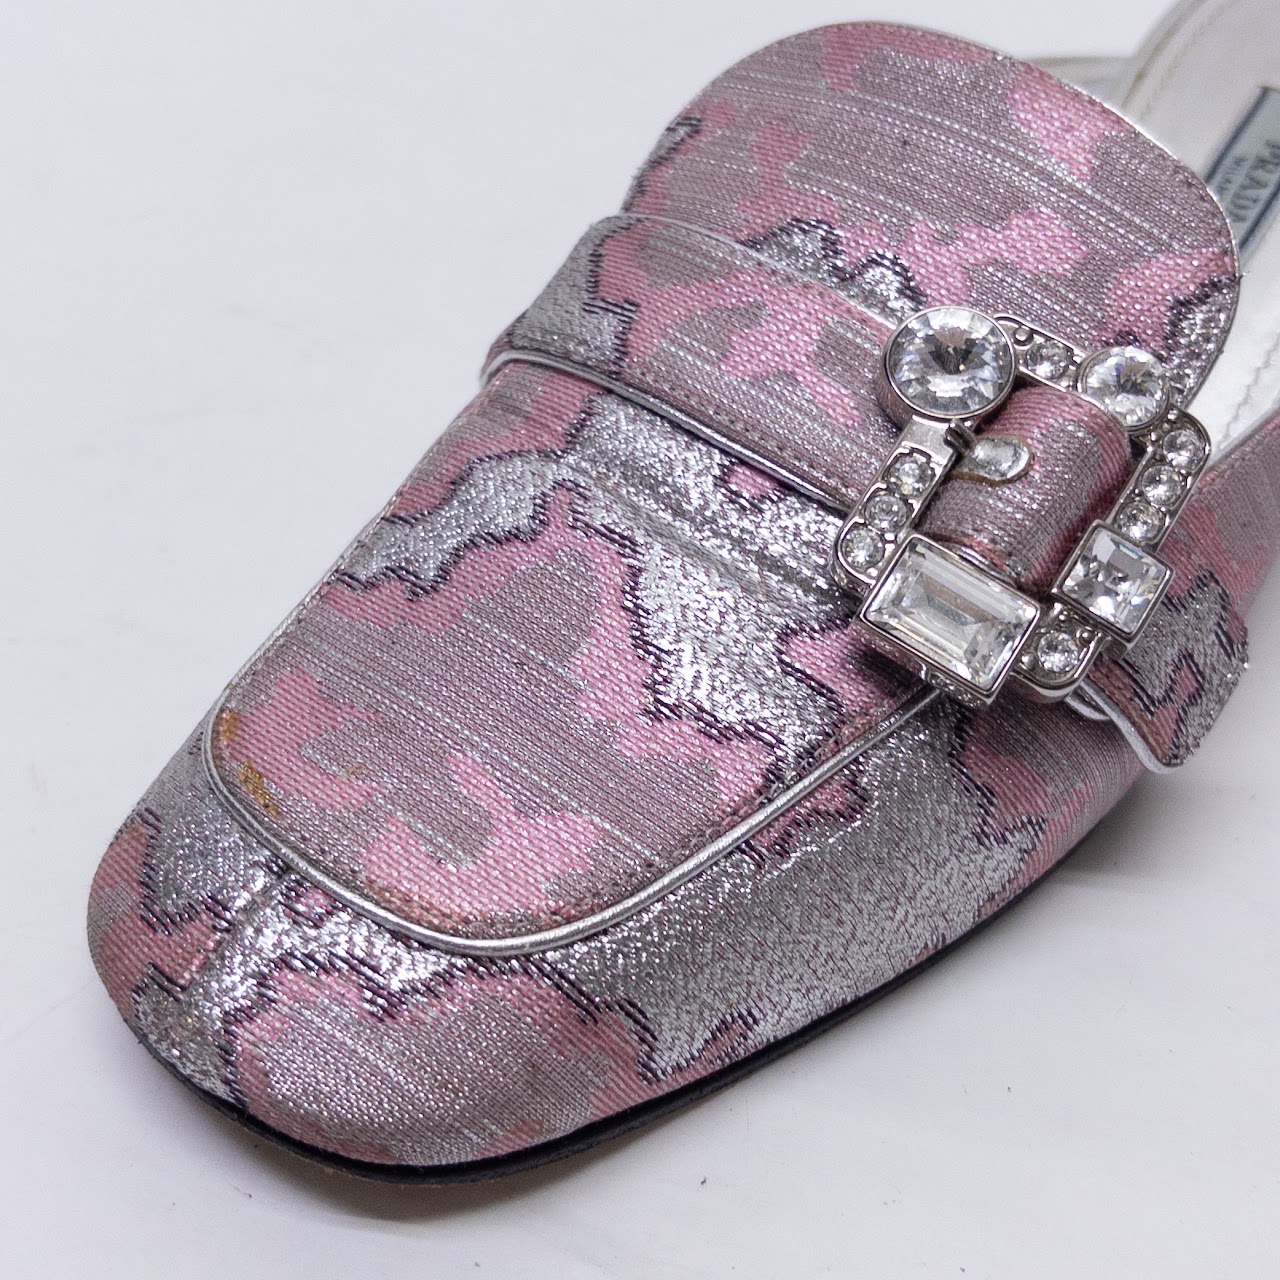 Prada Metallic Pink & Silver Brocade Jeweled Buckle Block Heel Mules